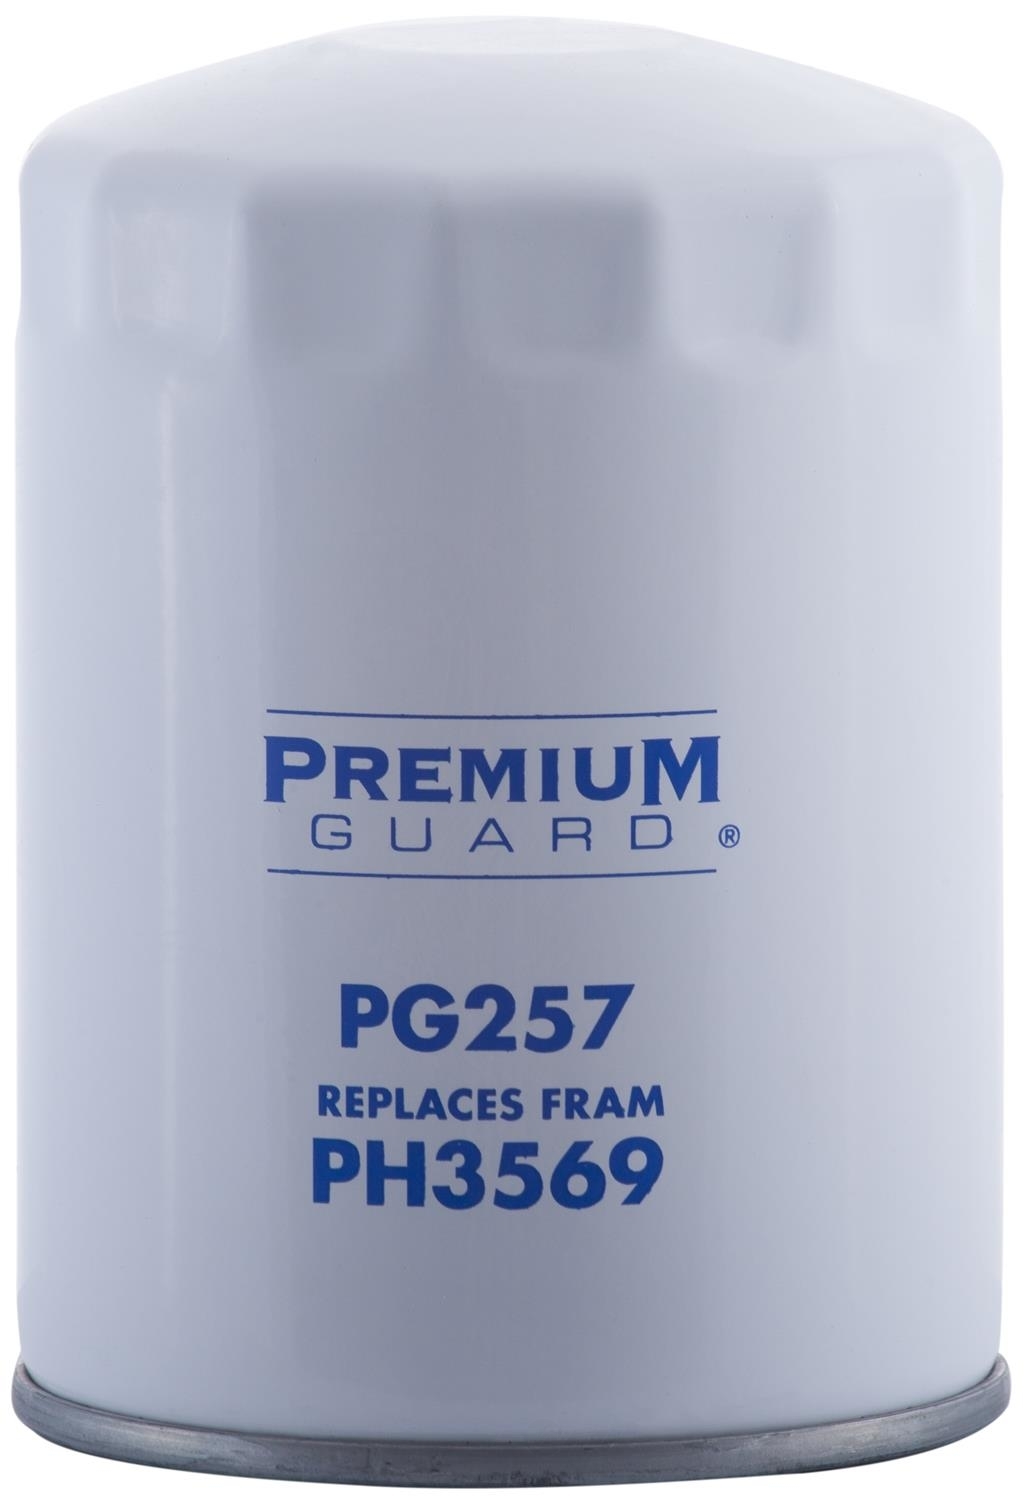 PREMIUM GUARD - Standard Life Oil Filter - PRG PG257